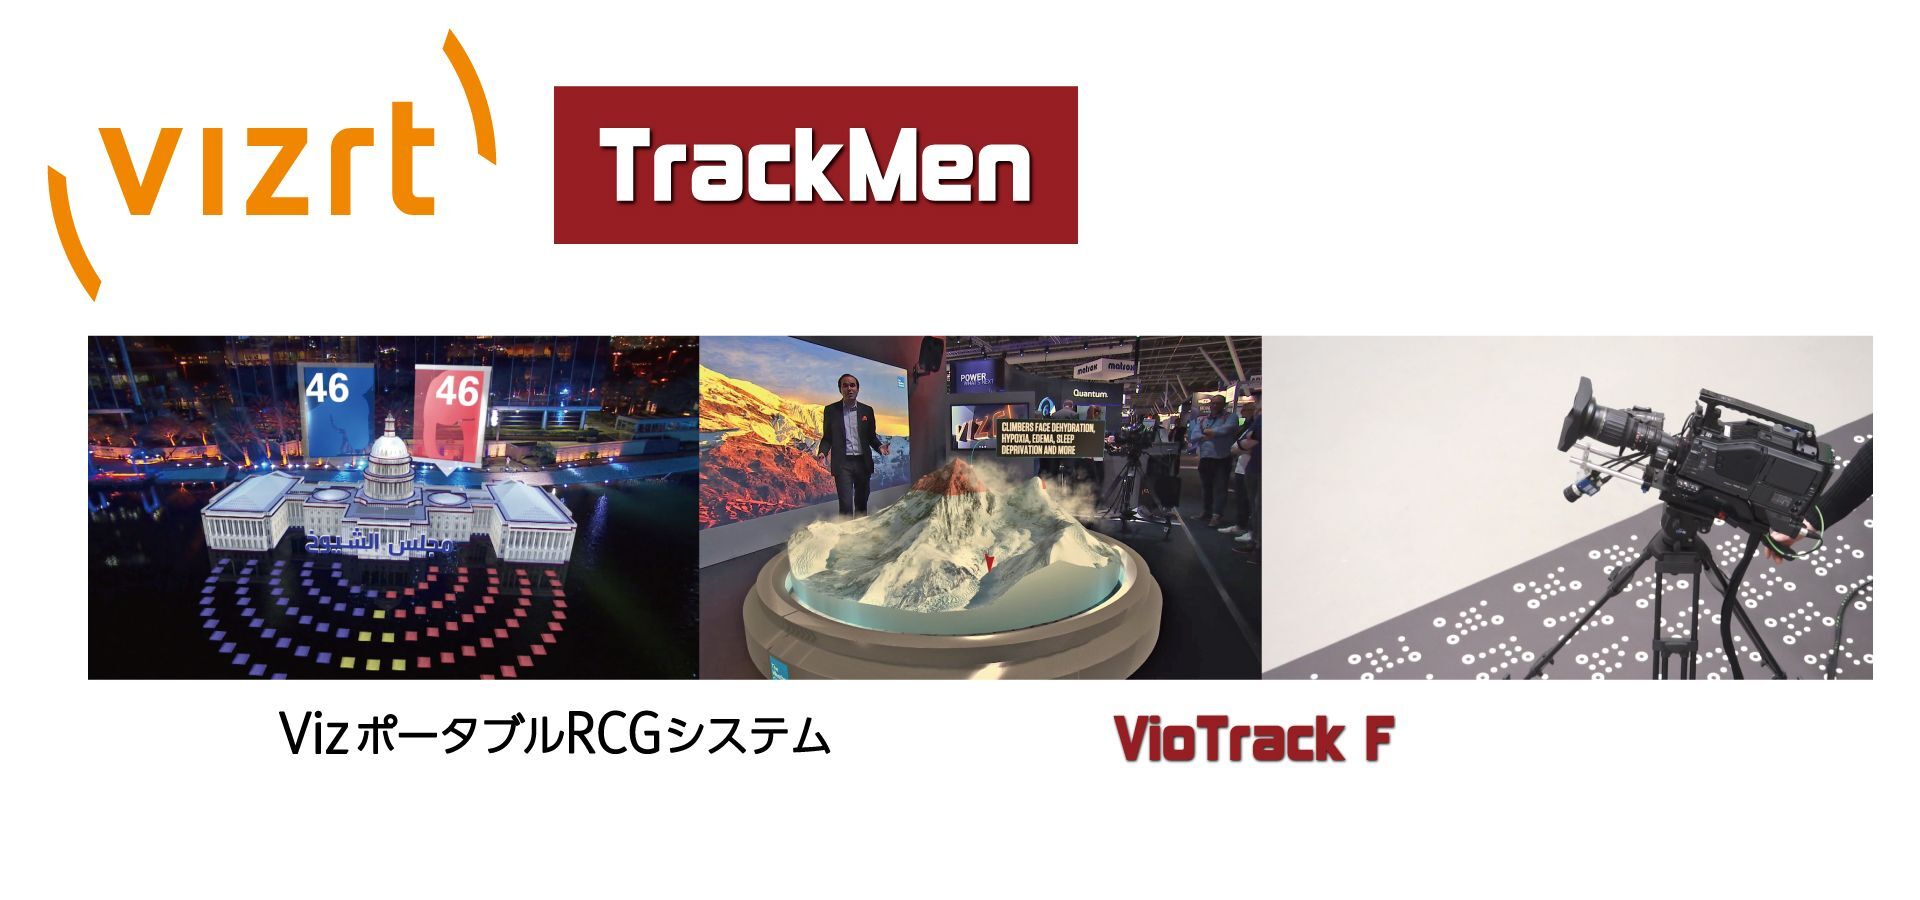 Vizrt/TrackMen出展製品